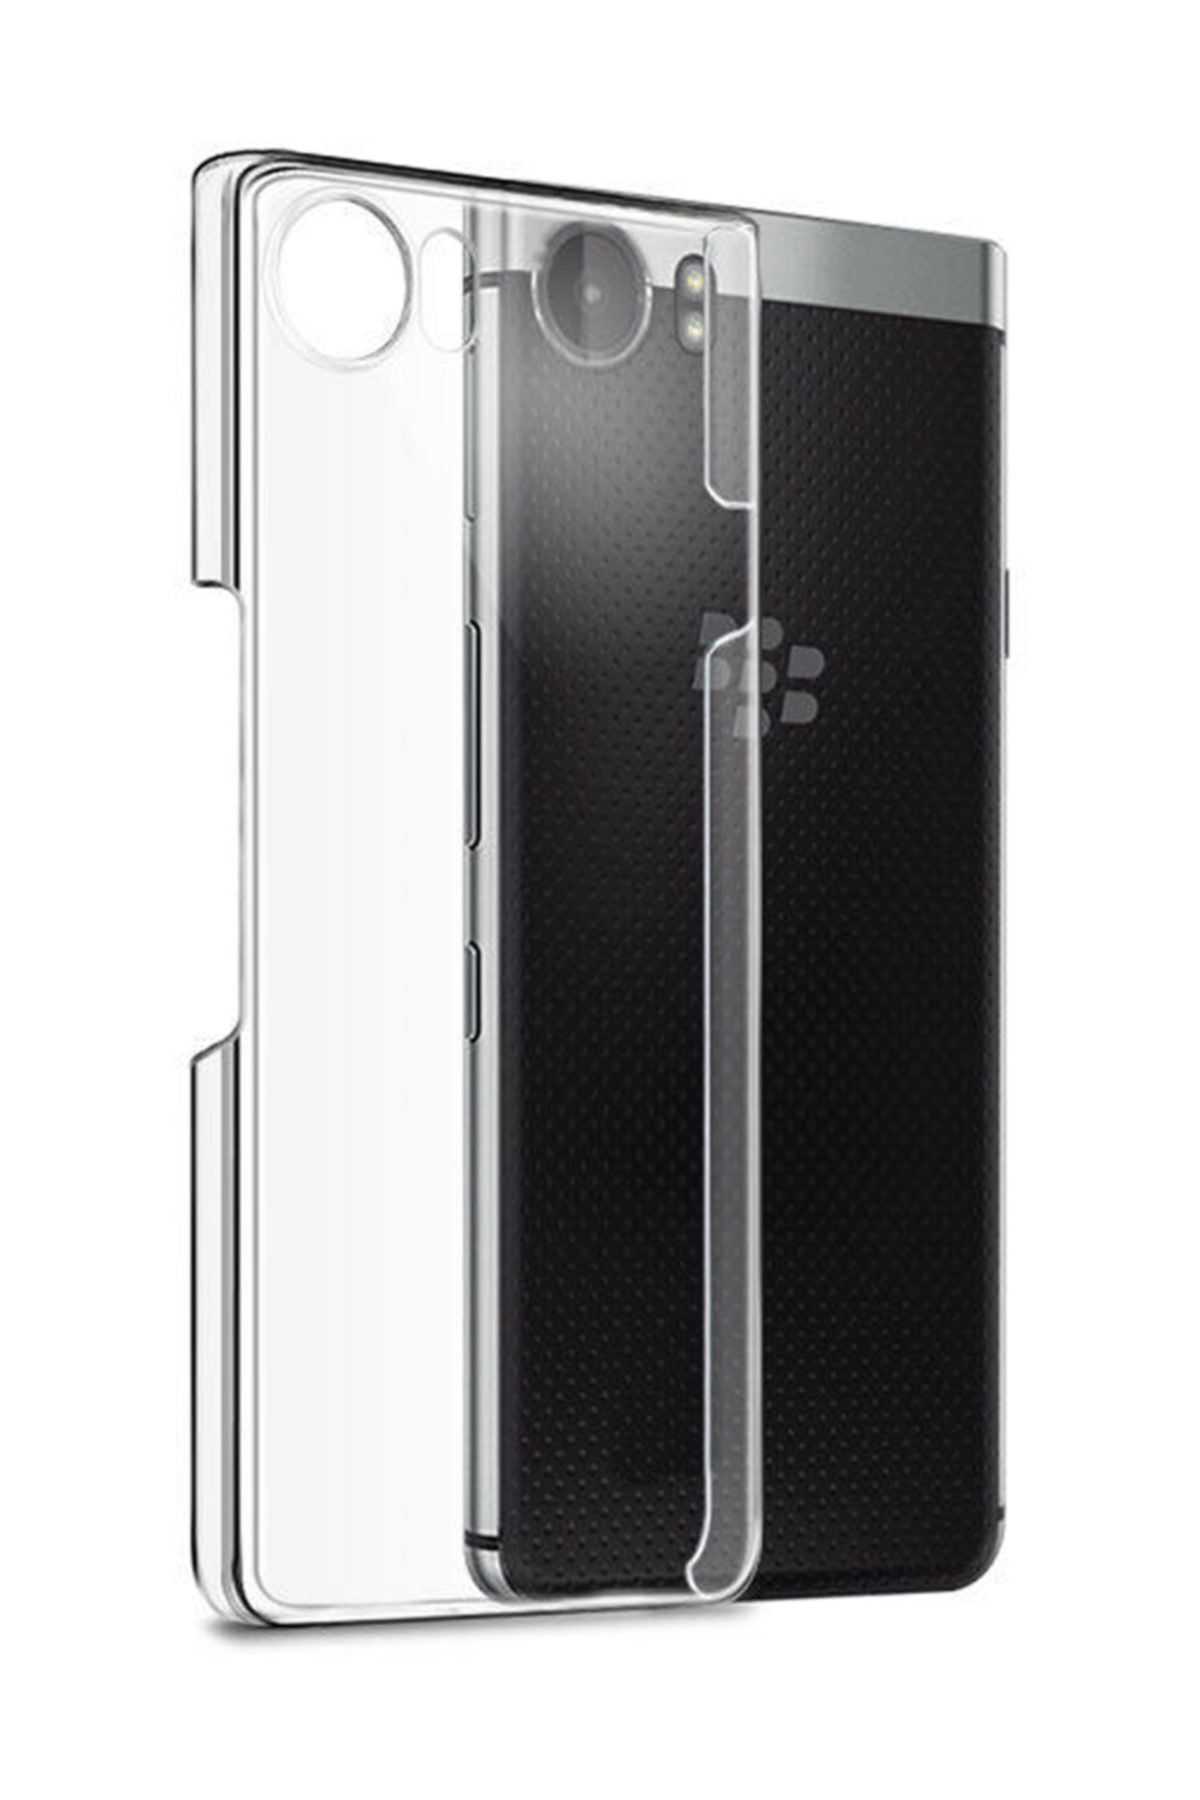 Microcase Blackberry Keyone Kristal Clear Serisi Arka Kapak Rubber Kılıf - Şeffaf